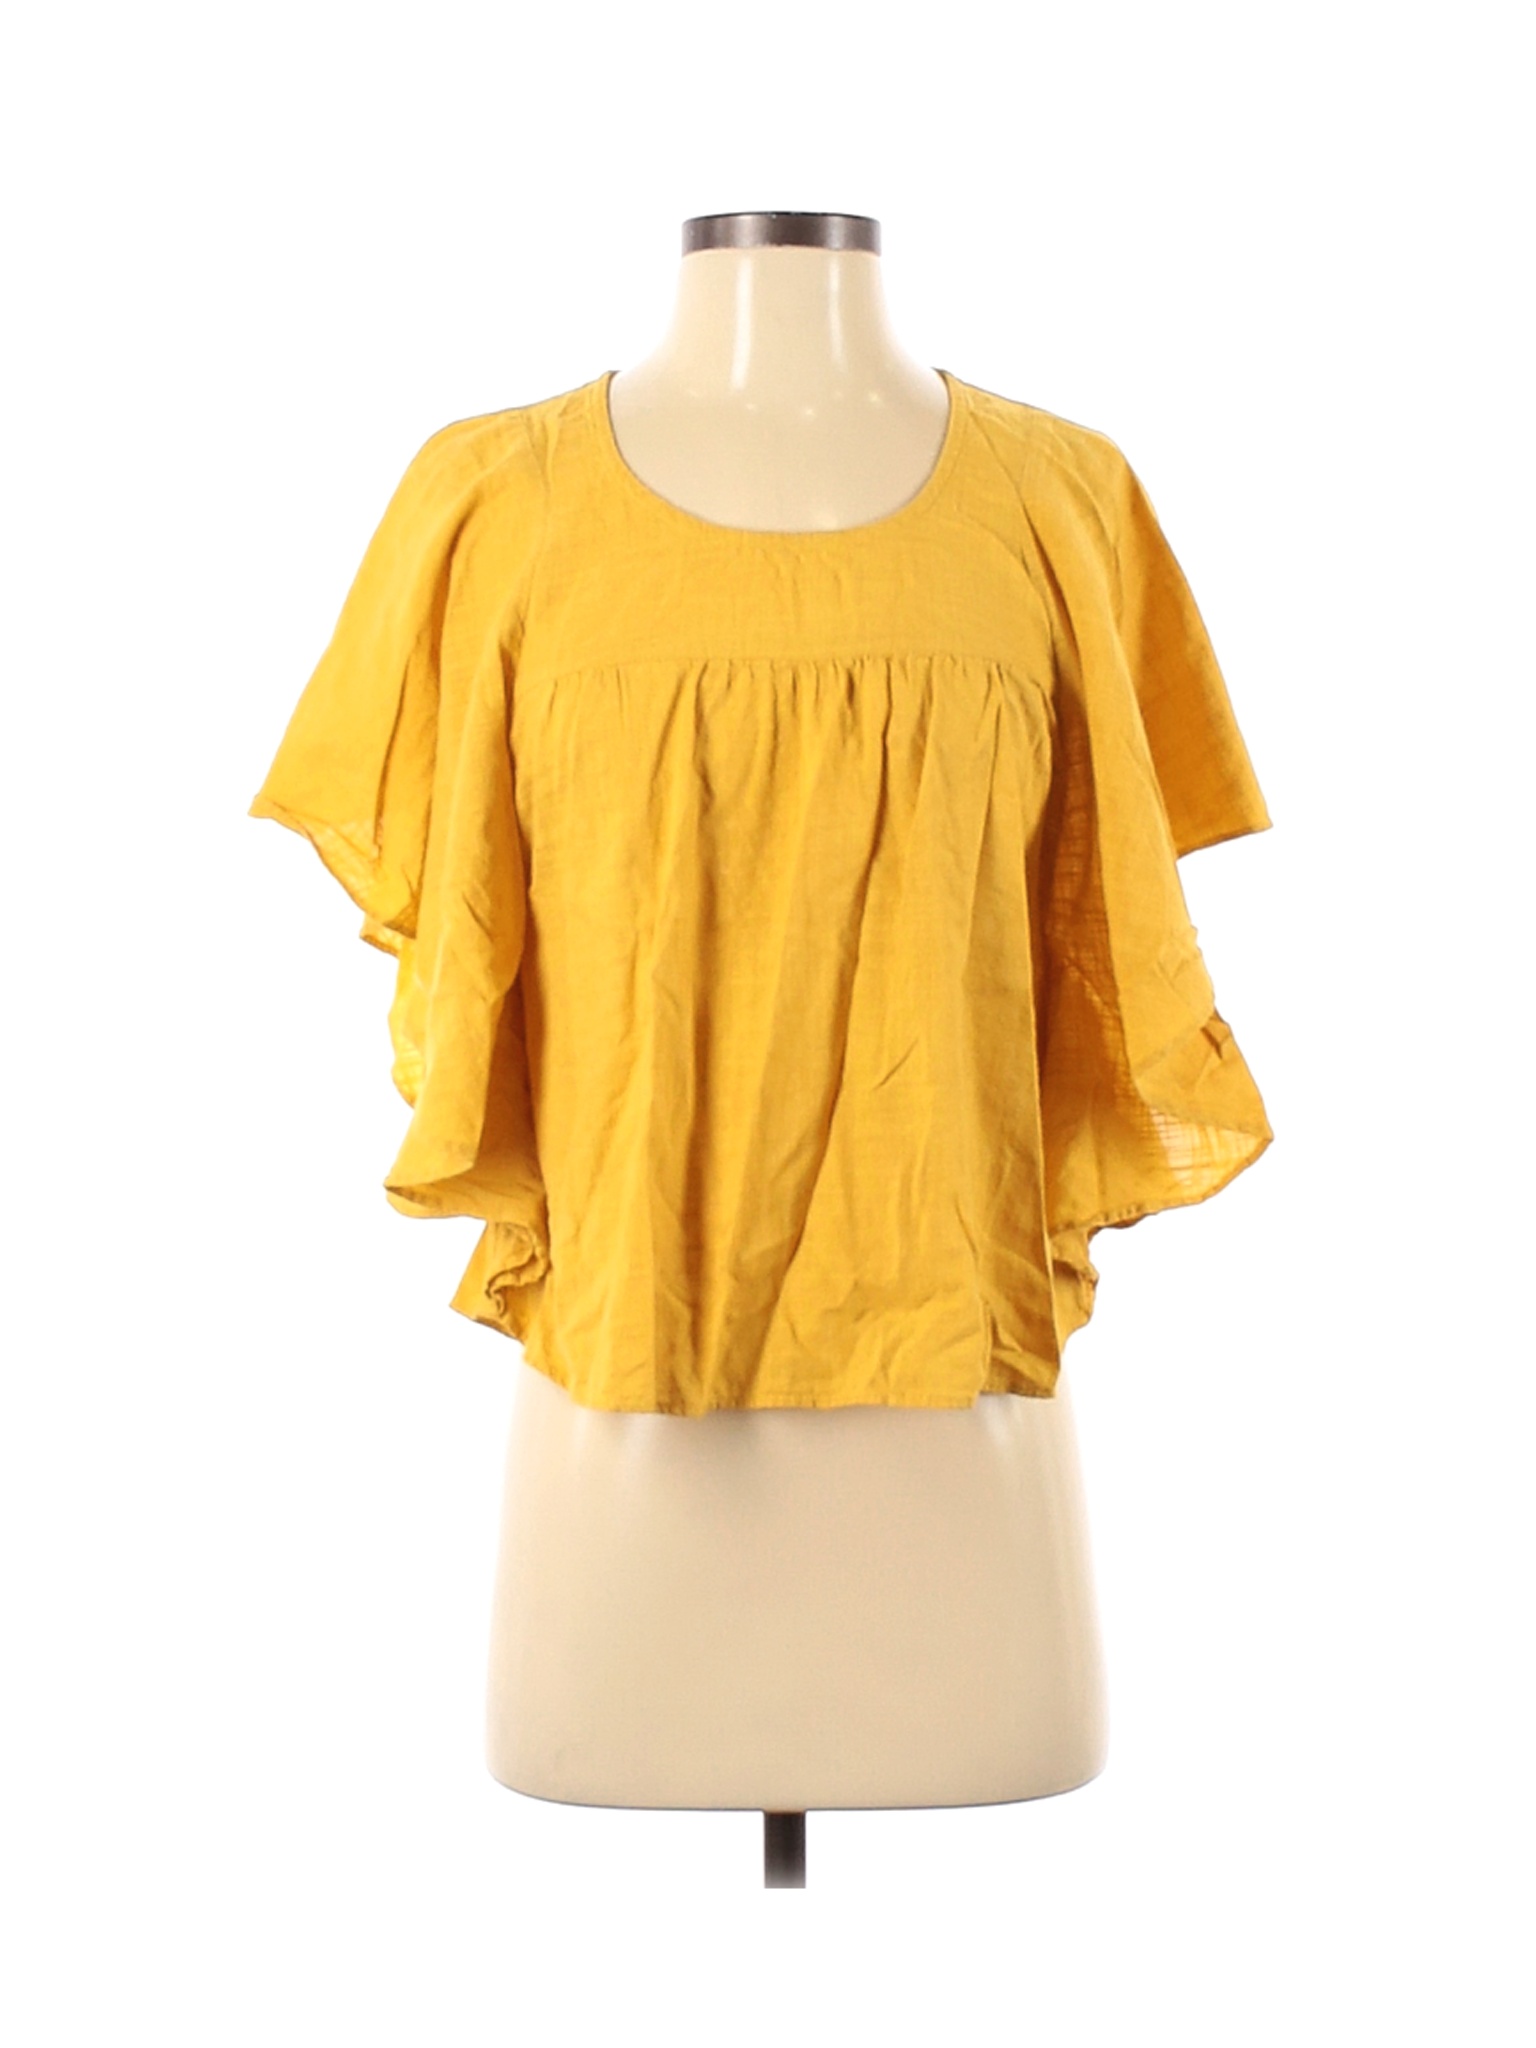 Old Navy Women Yellow Short Sleeve Blouse XS | eBay